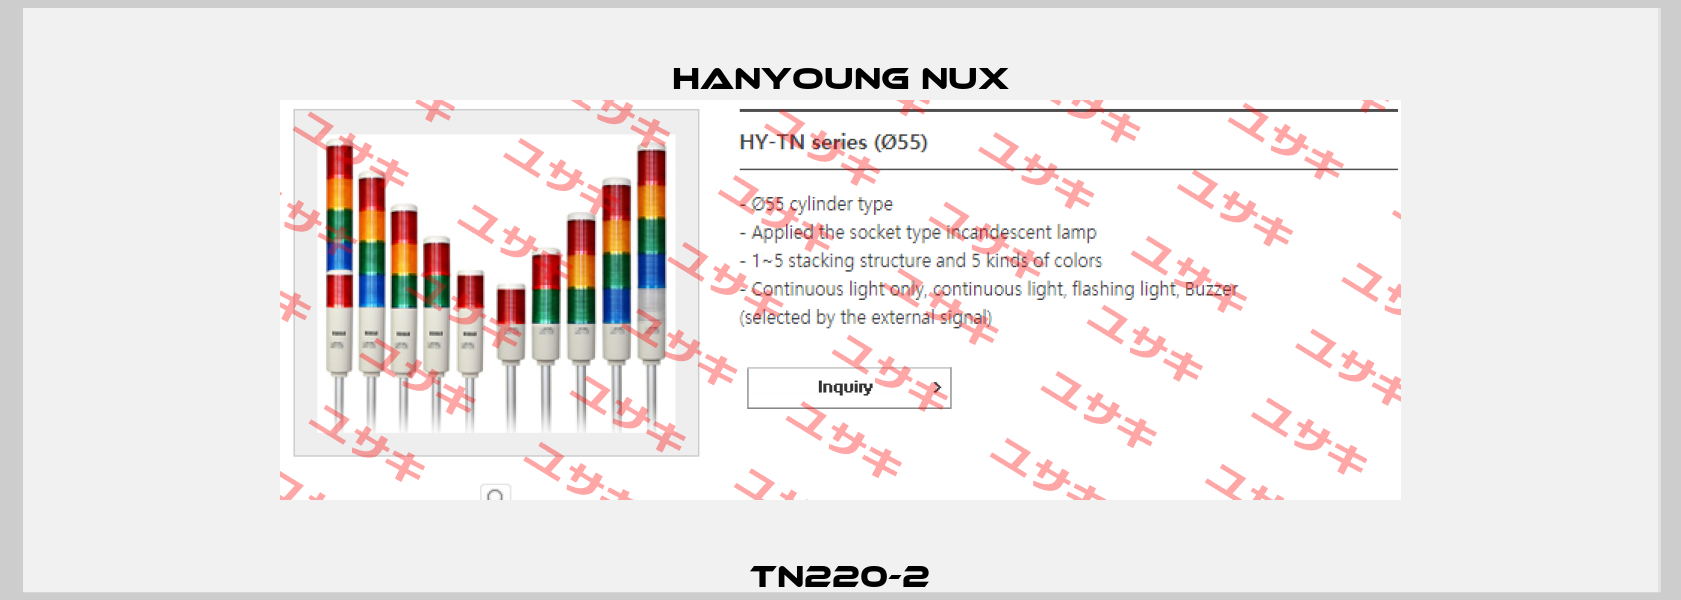 TN220-2 HanYoung NUX